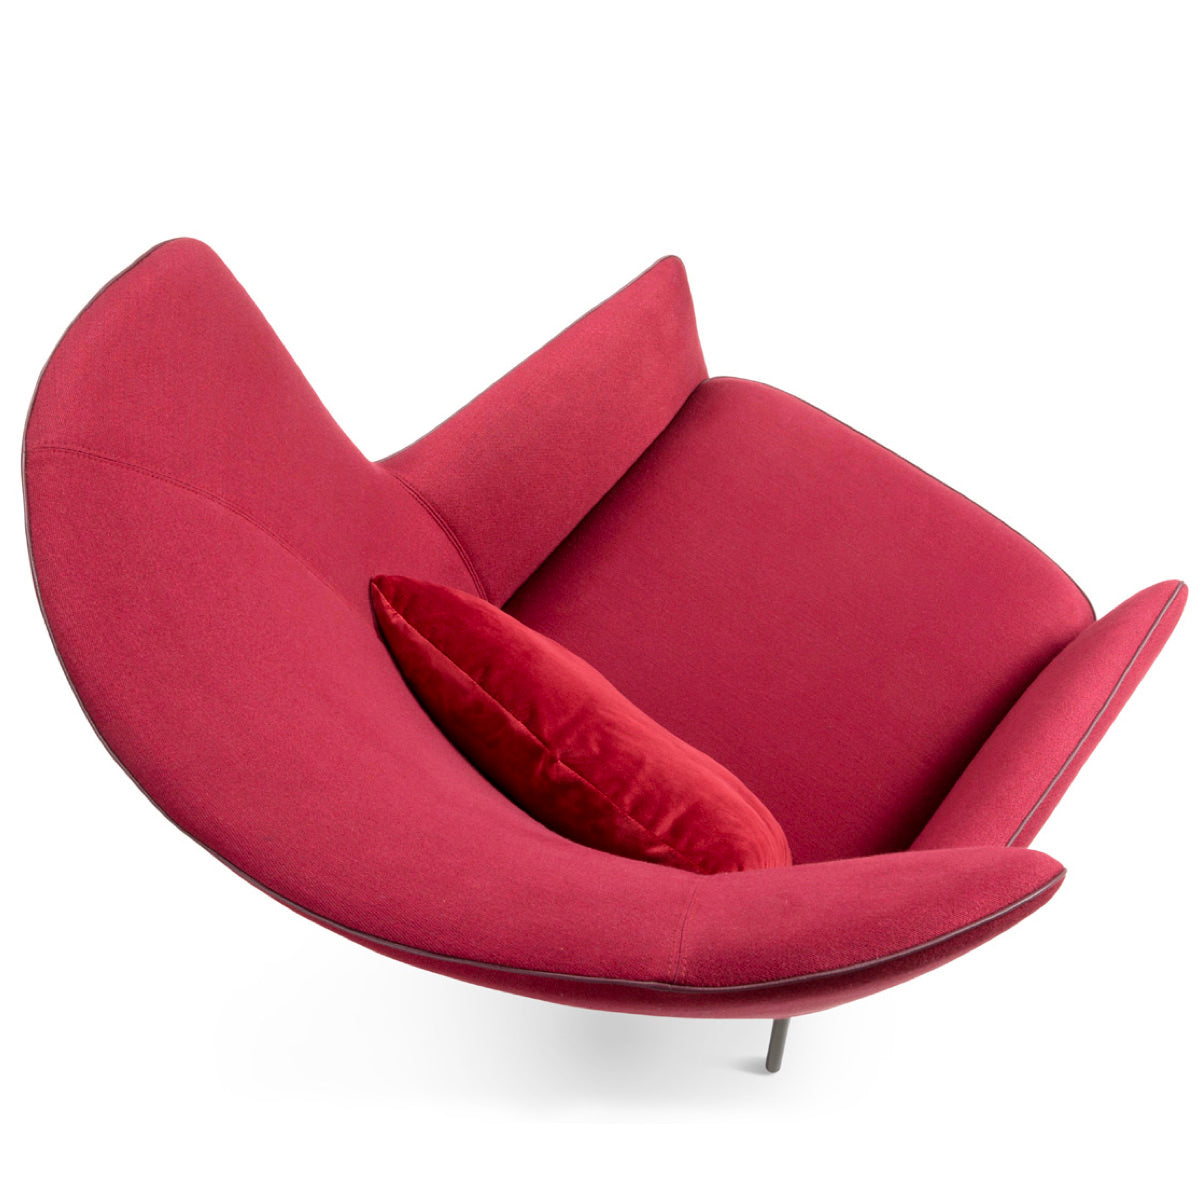 Contemporary high back chairLILOU armchair Christine Kröncke Interiordesign